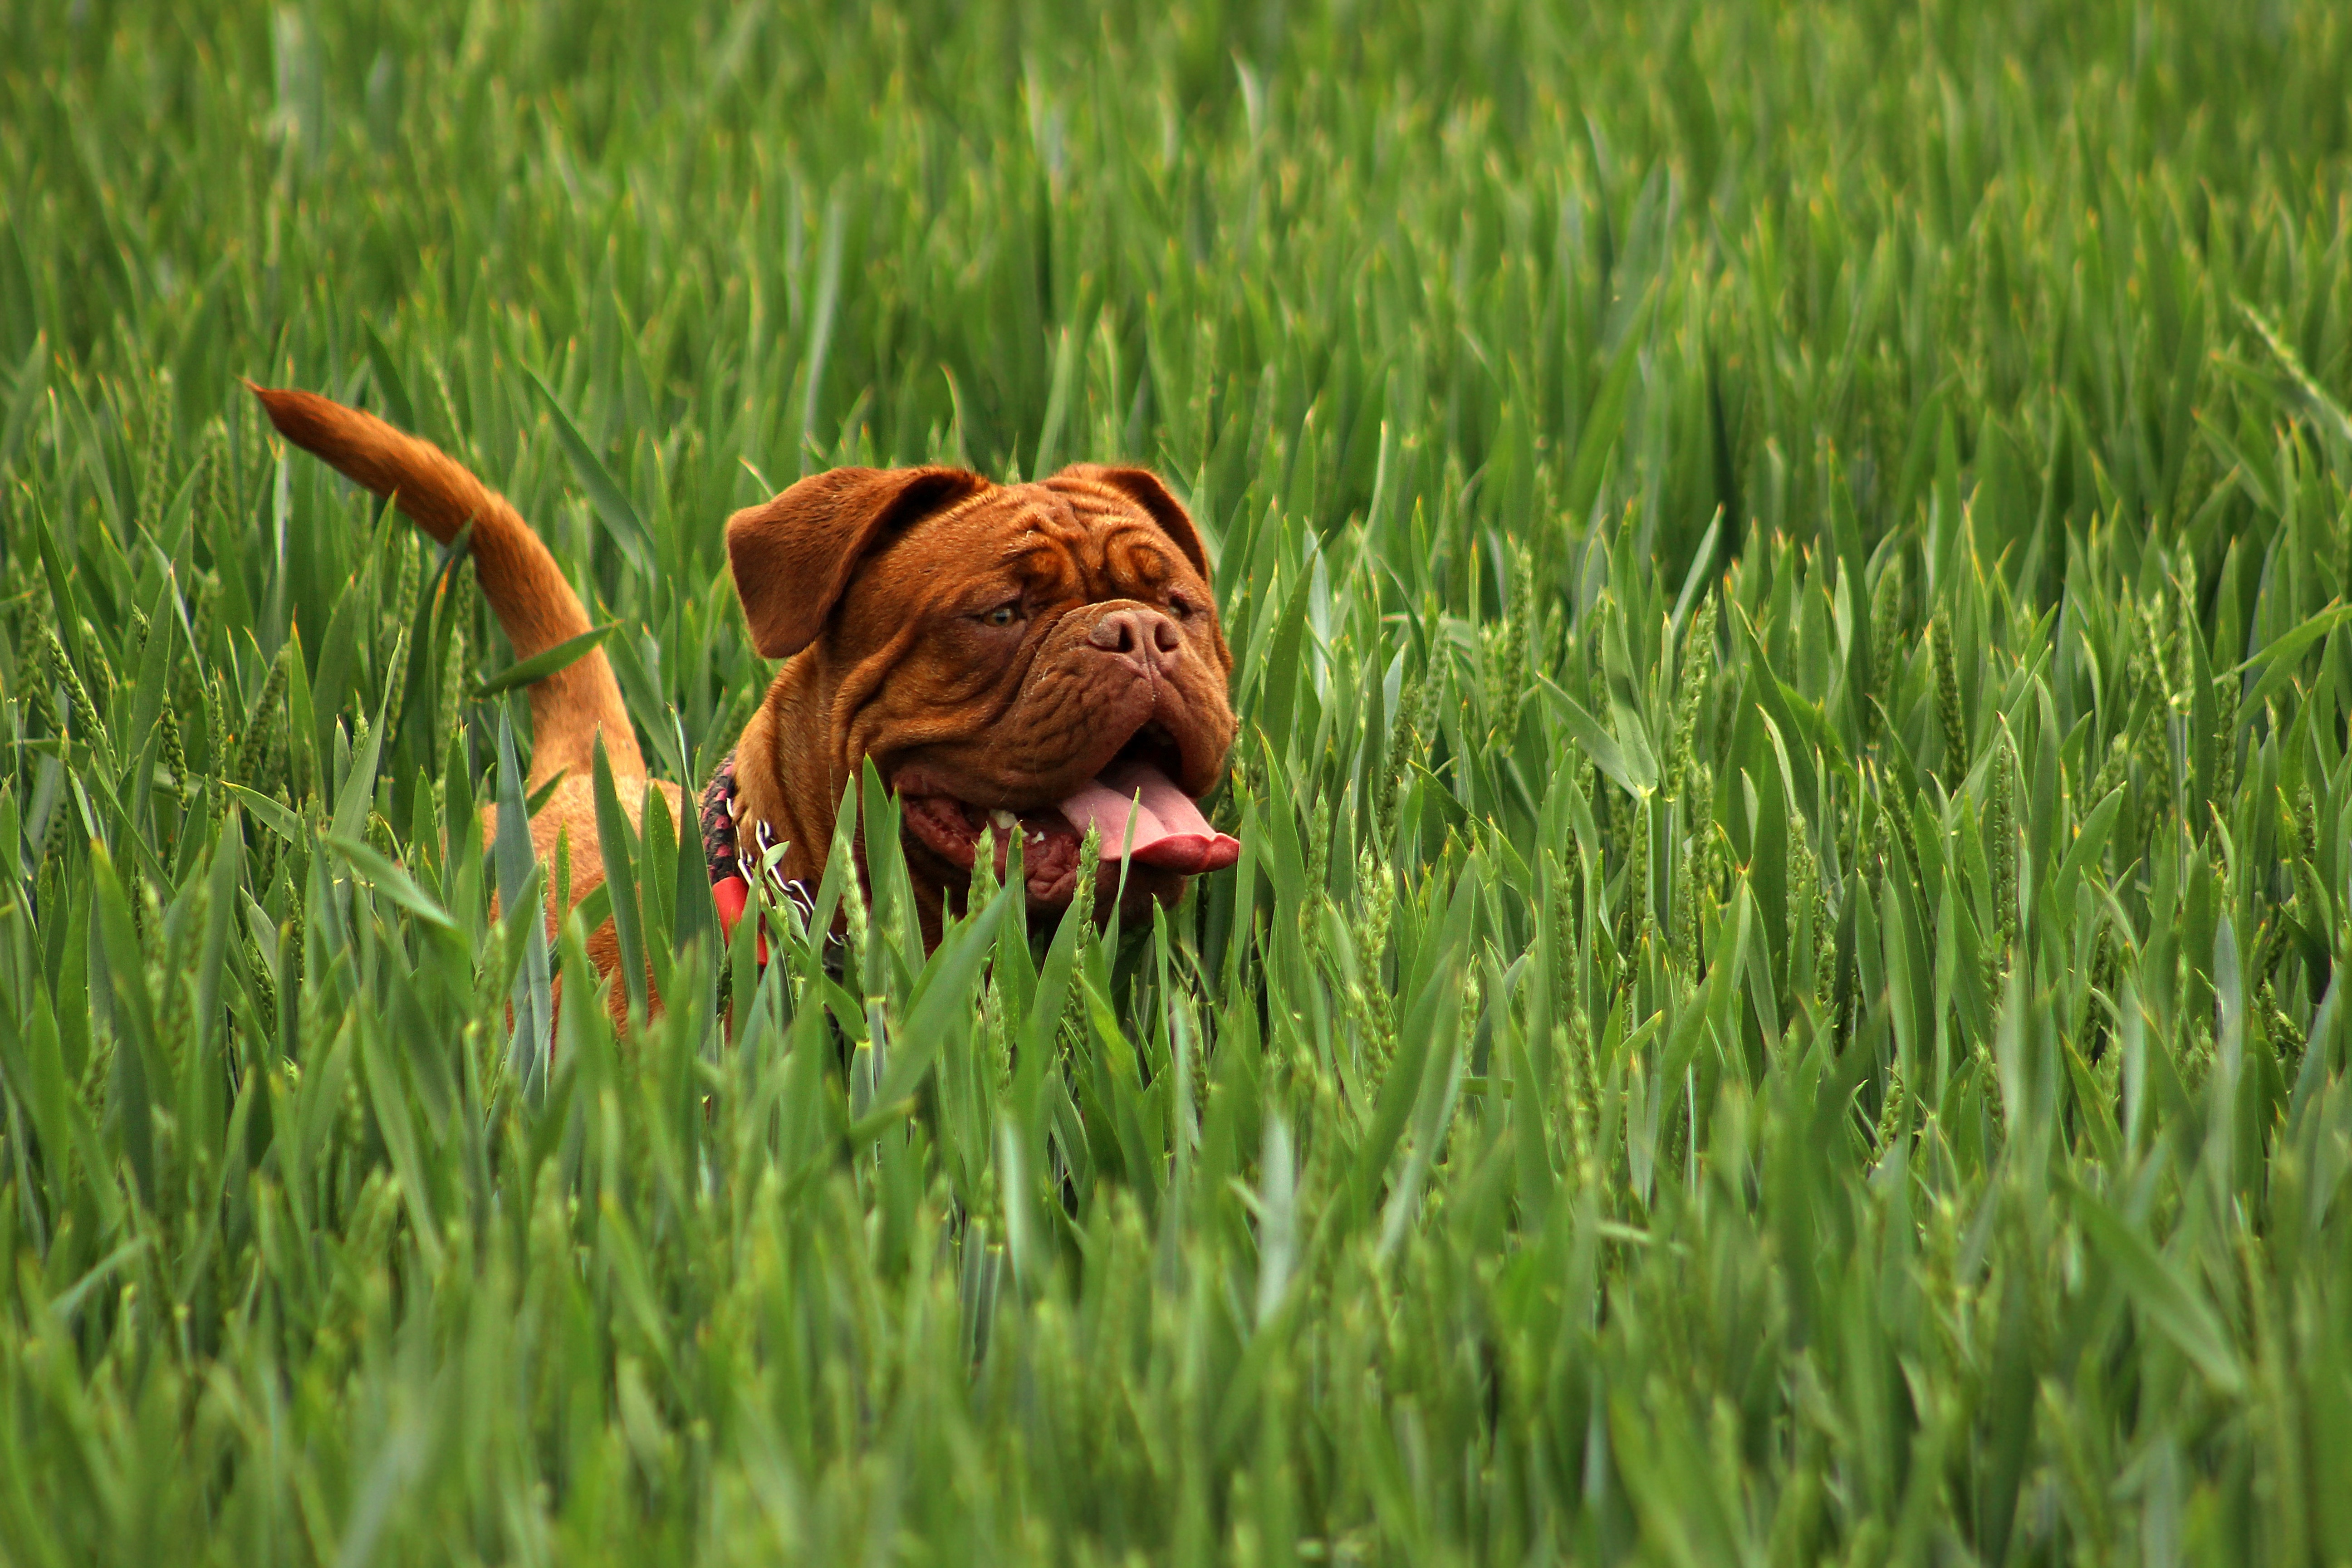 brown short coat dog on green grass during daytime